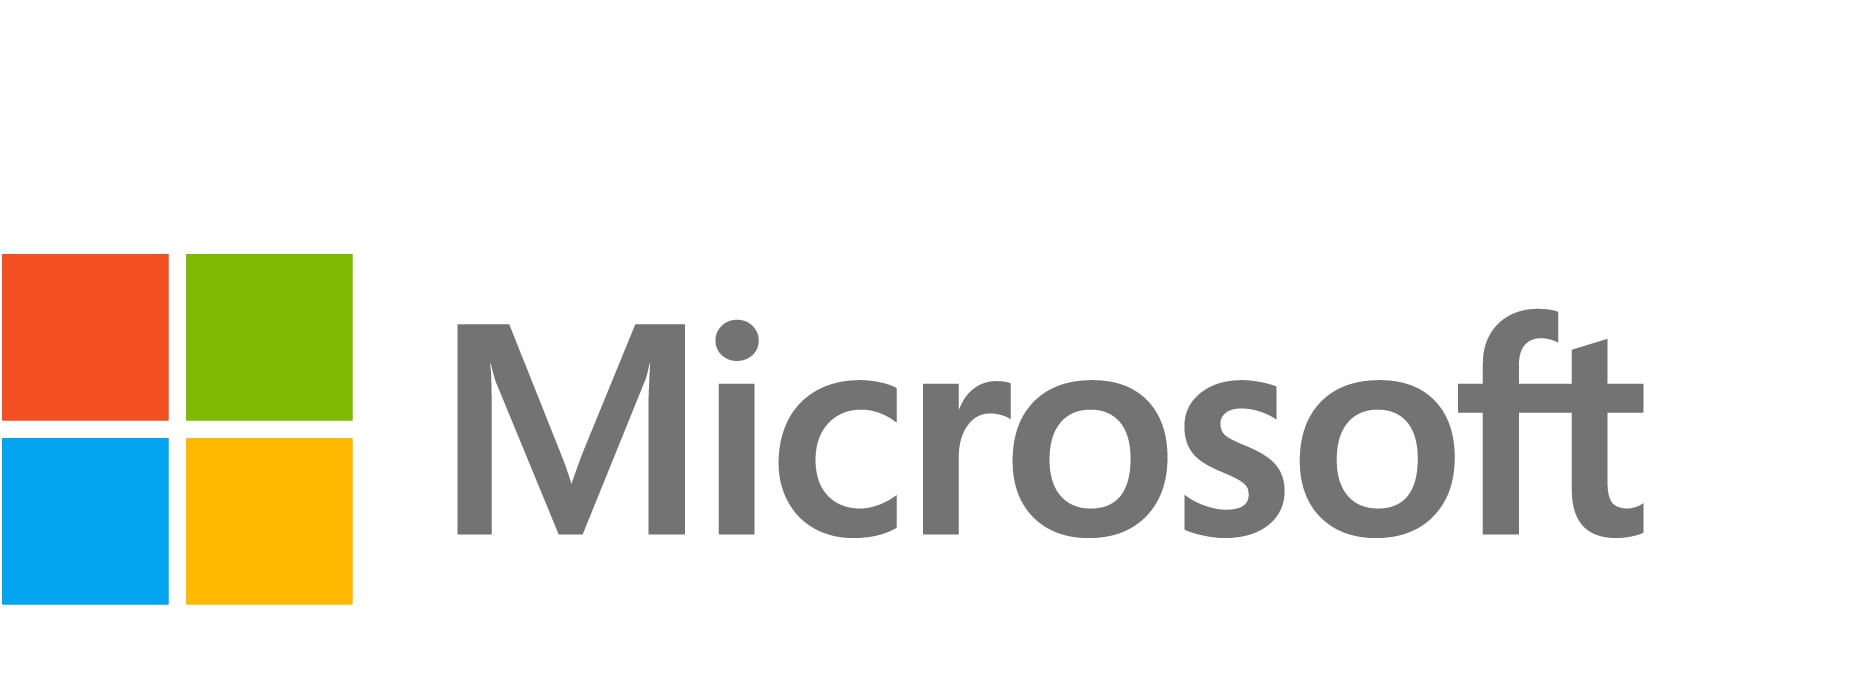 Microsoft Dynamics 365 for Sales Premium - subscription license (1 month) - 1 license